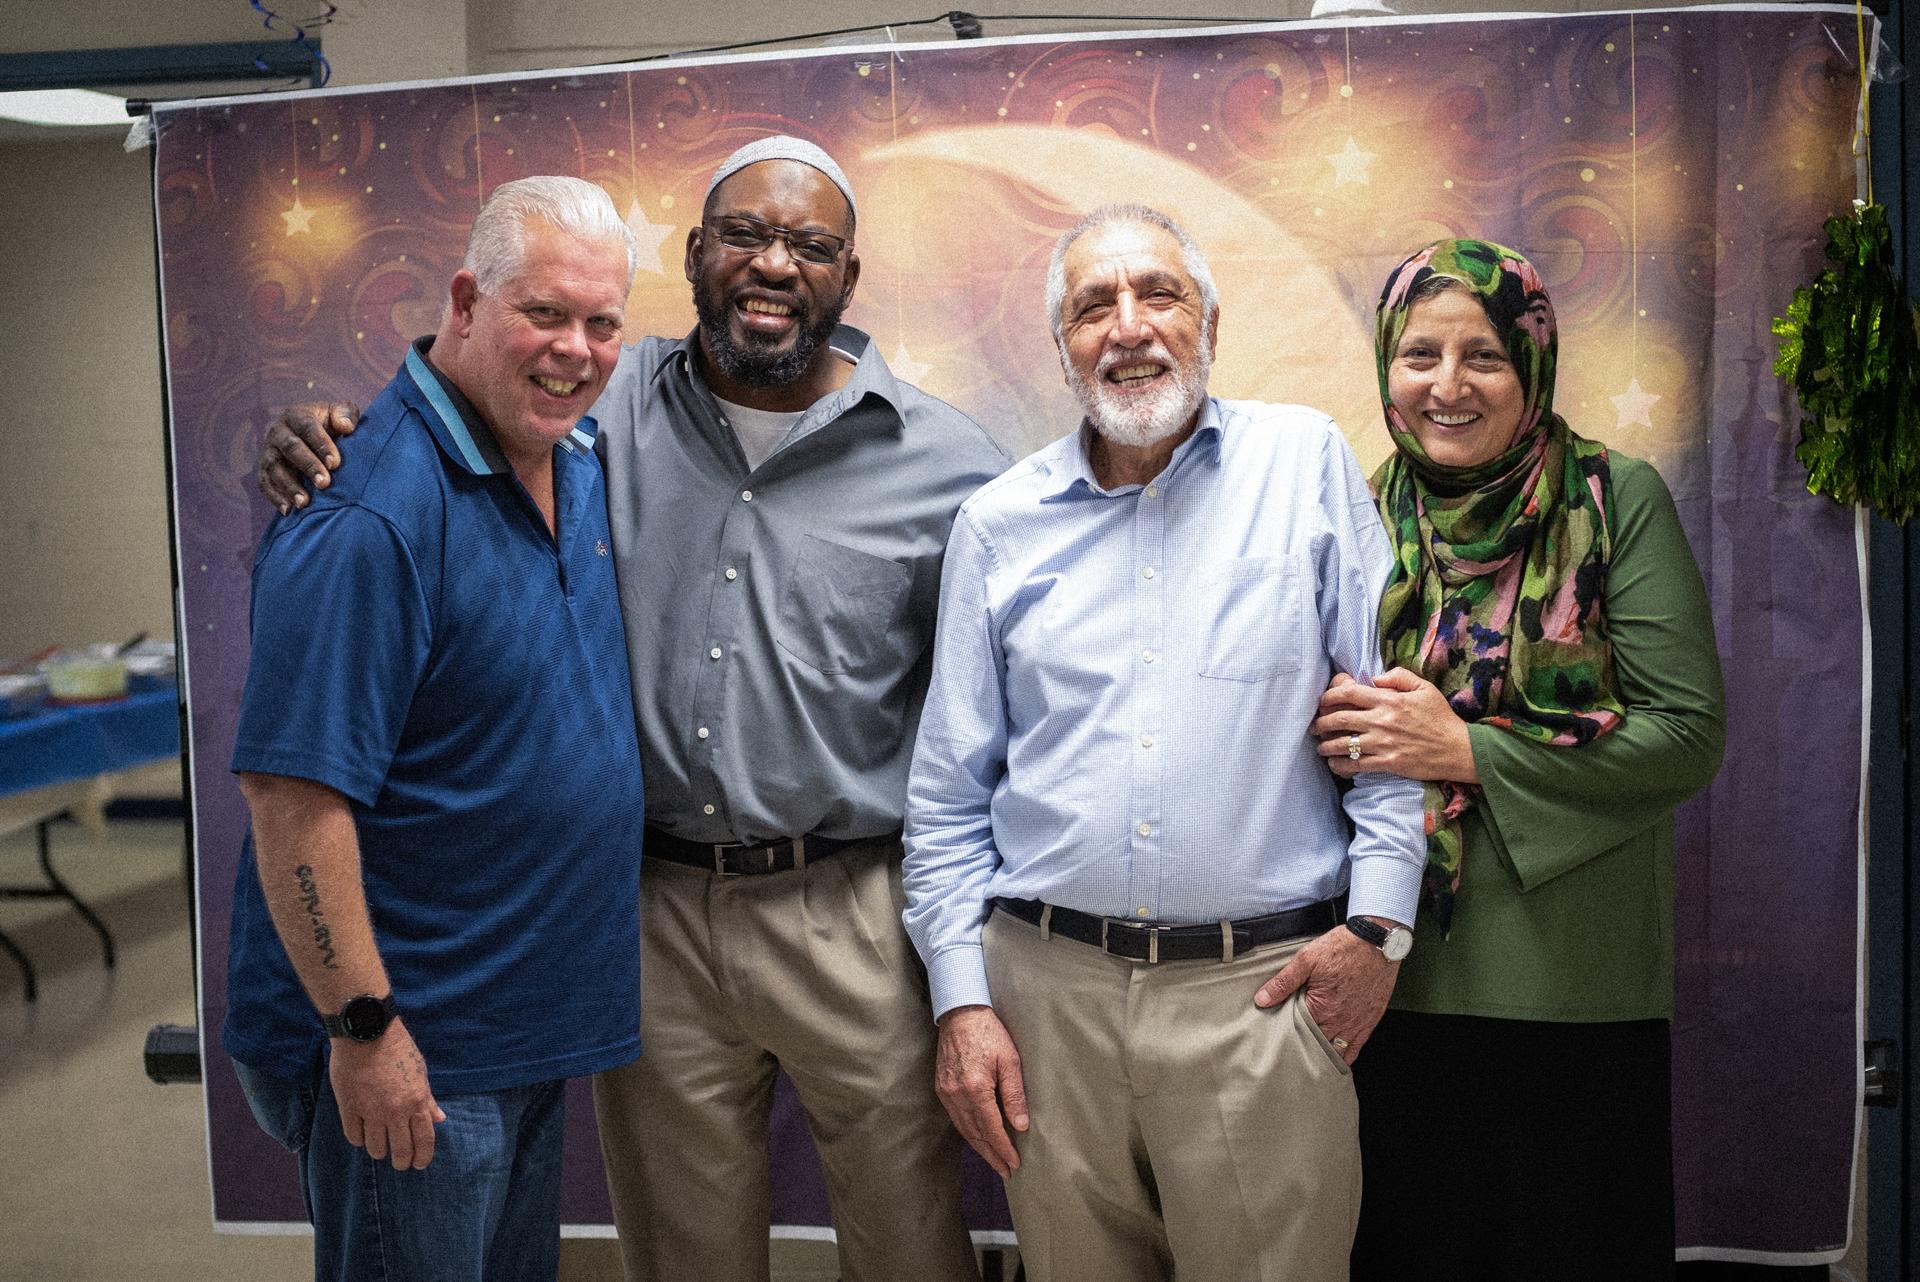 Richard “Mac” McKinney (left), Jomo Williams, Saber Bahrami and Bibi Bahrami pose together.